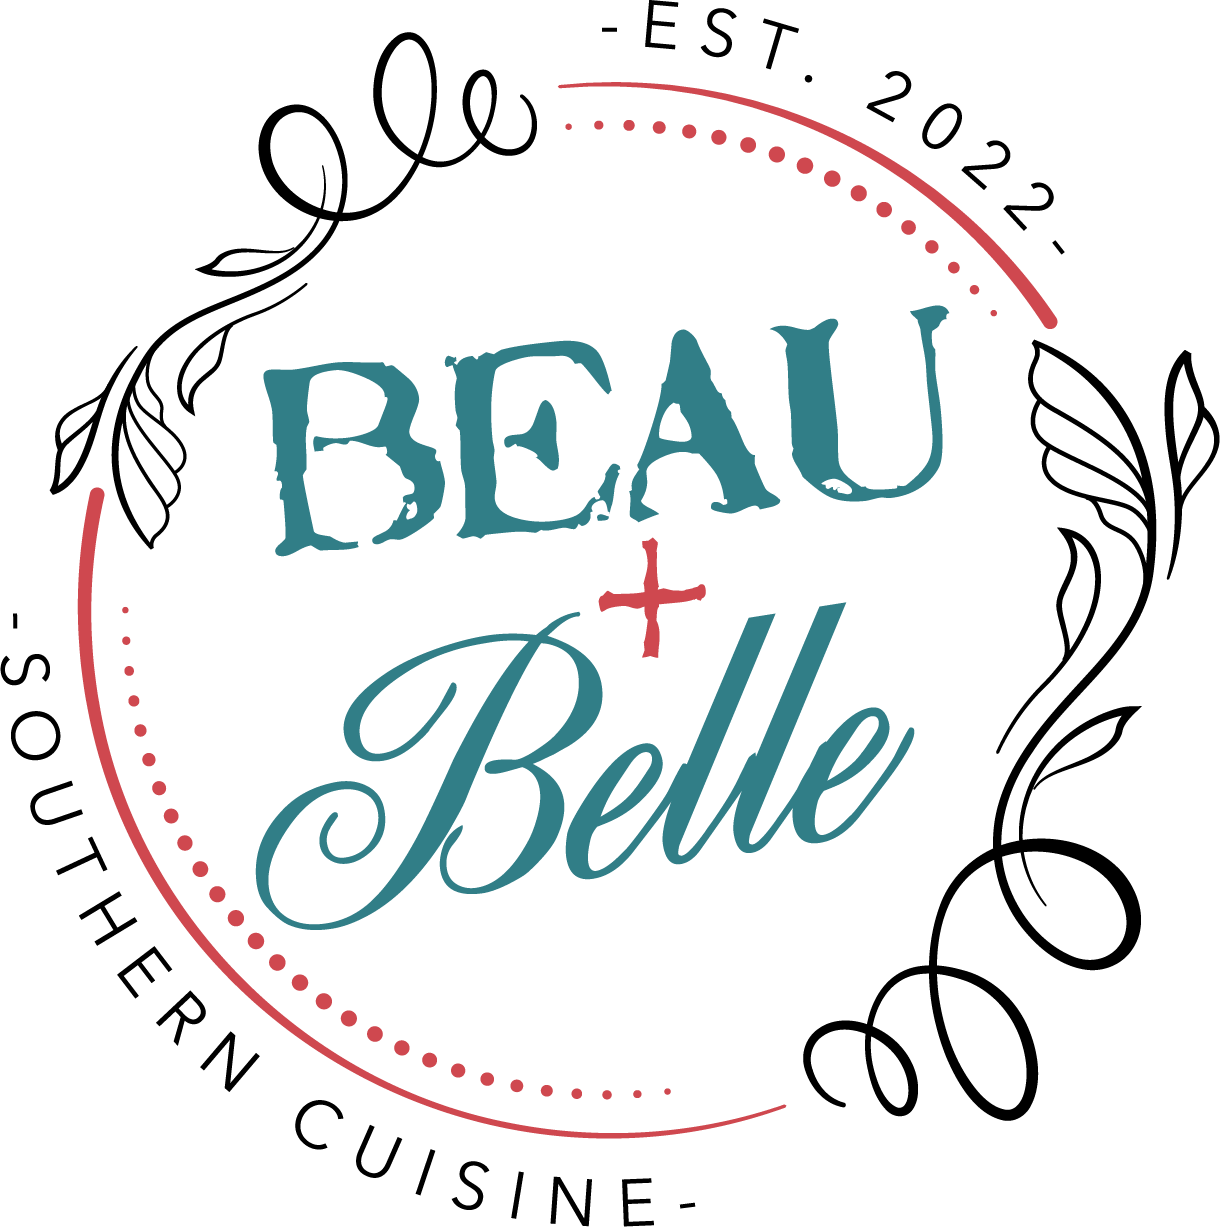 Beau+Belle Southern Cuisine